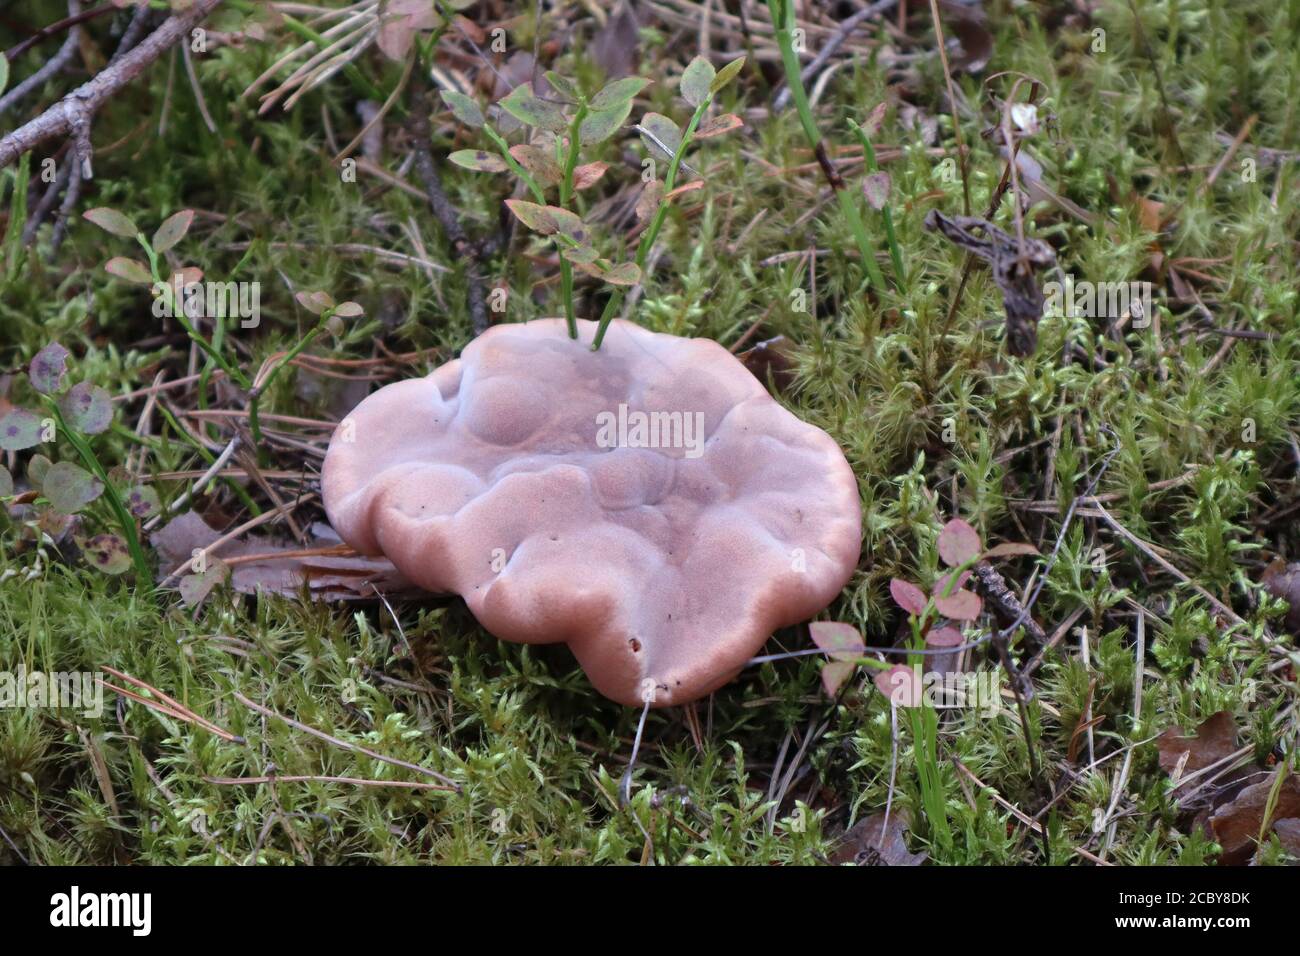 Hydnellum peckii mushroom in pine forest. Close-up photo  Stock Photo